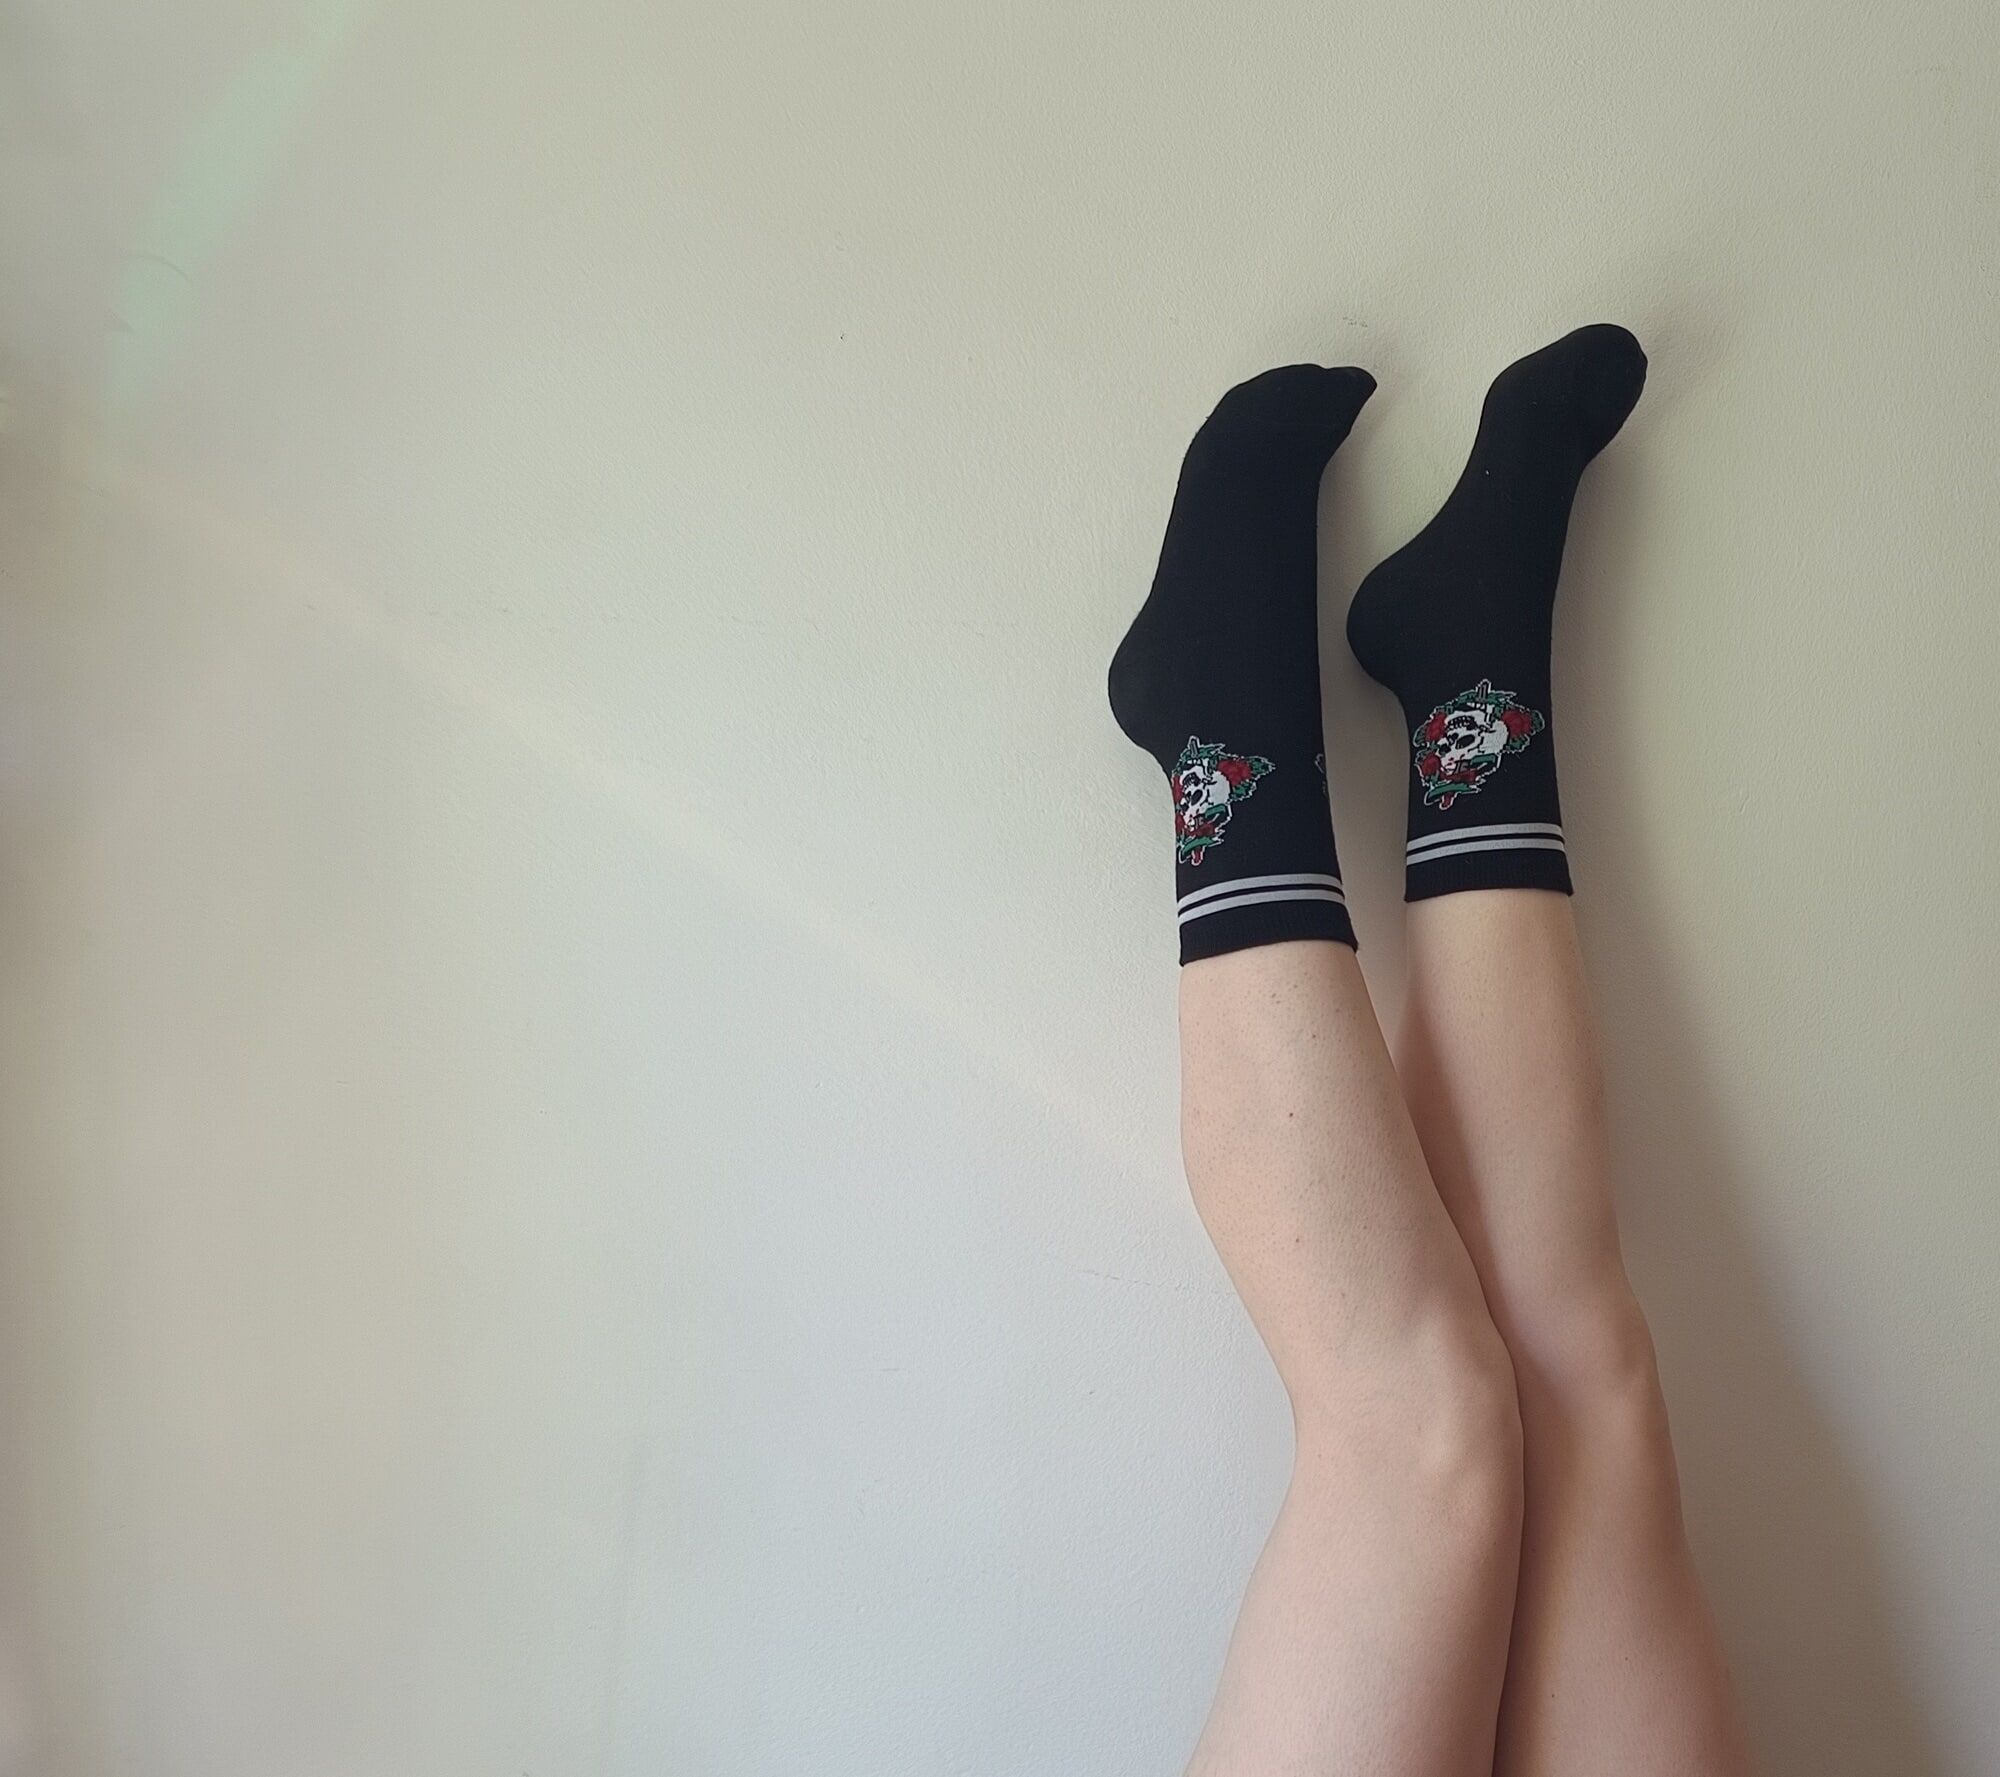 My fav socks and stockings #9